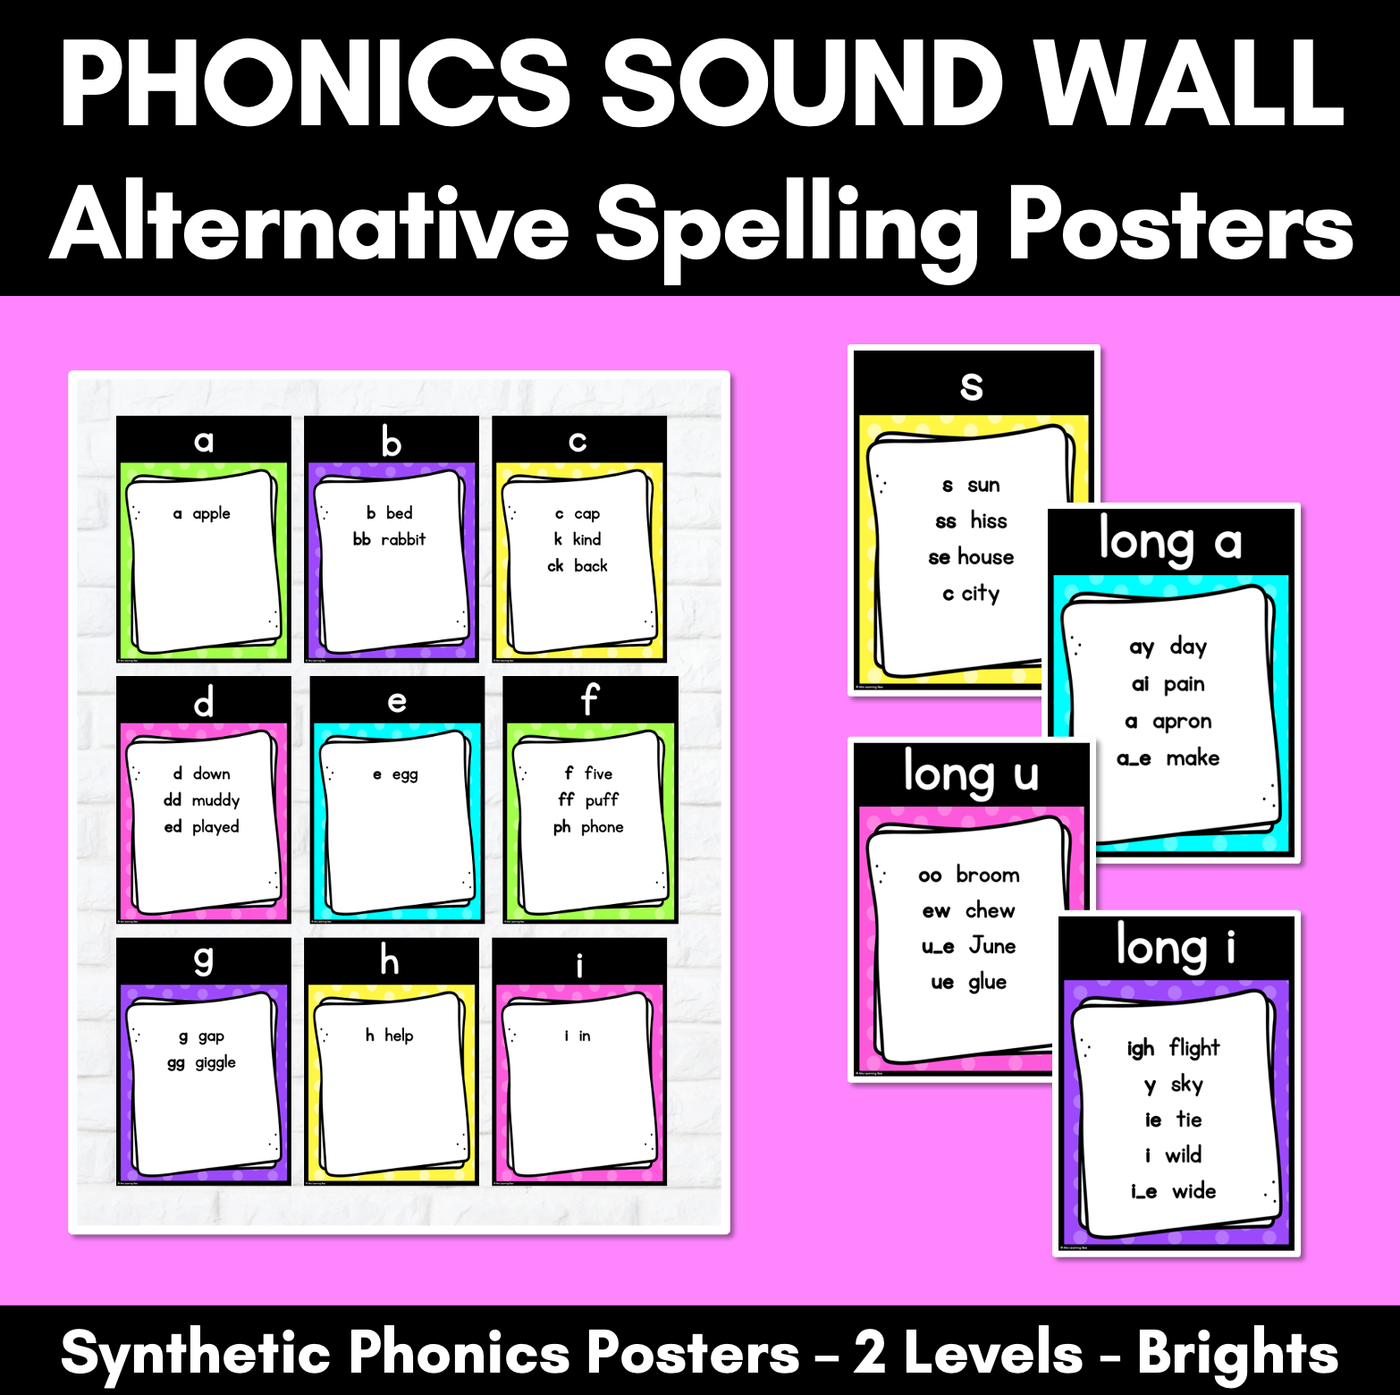 Phonics Sound Wall Posters - Alternative Spellings Display - Rainbow Decor